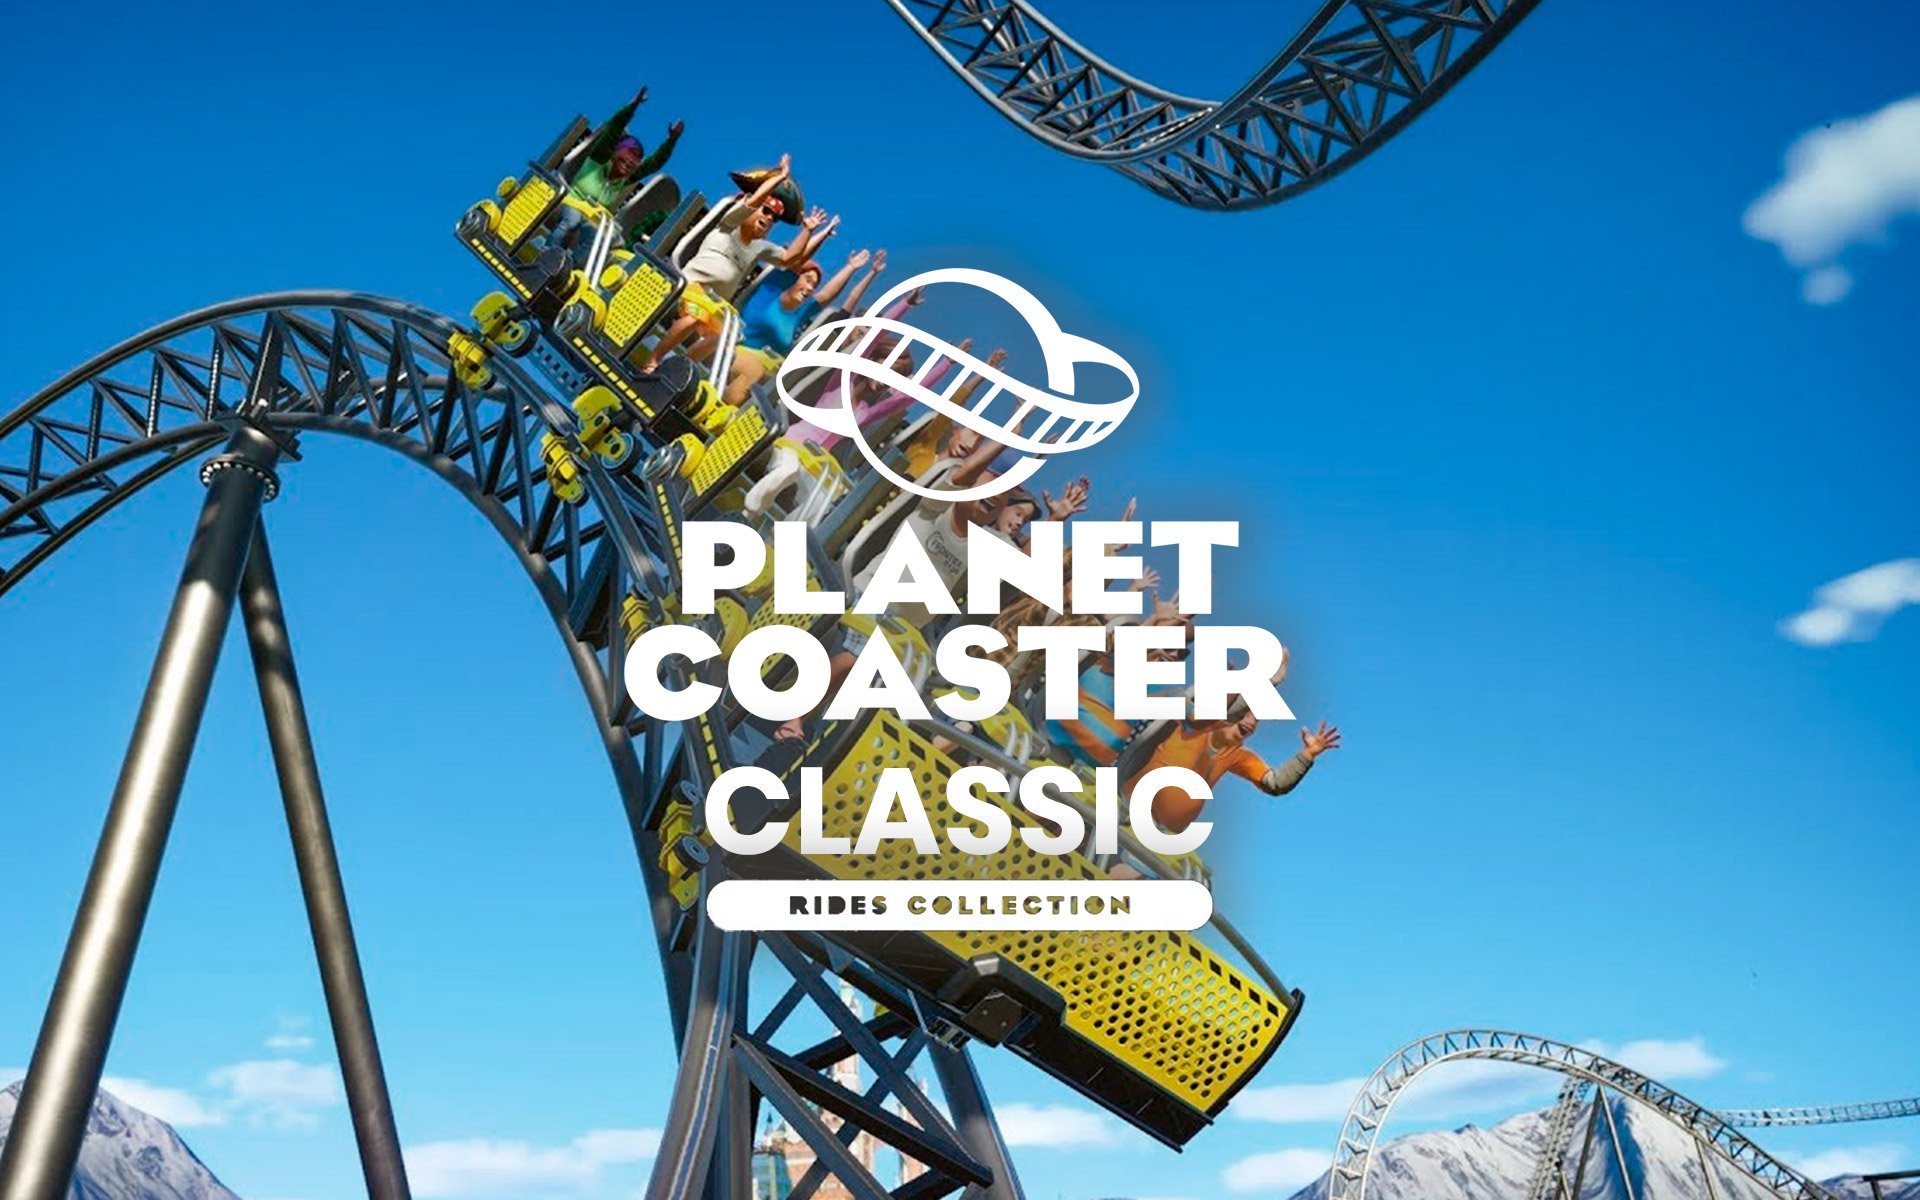 Compre Planet Coaster a partir de R$ 21.99